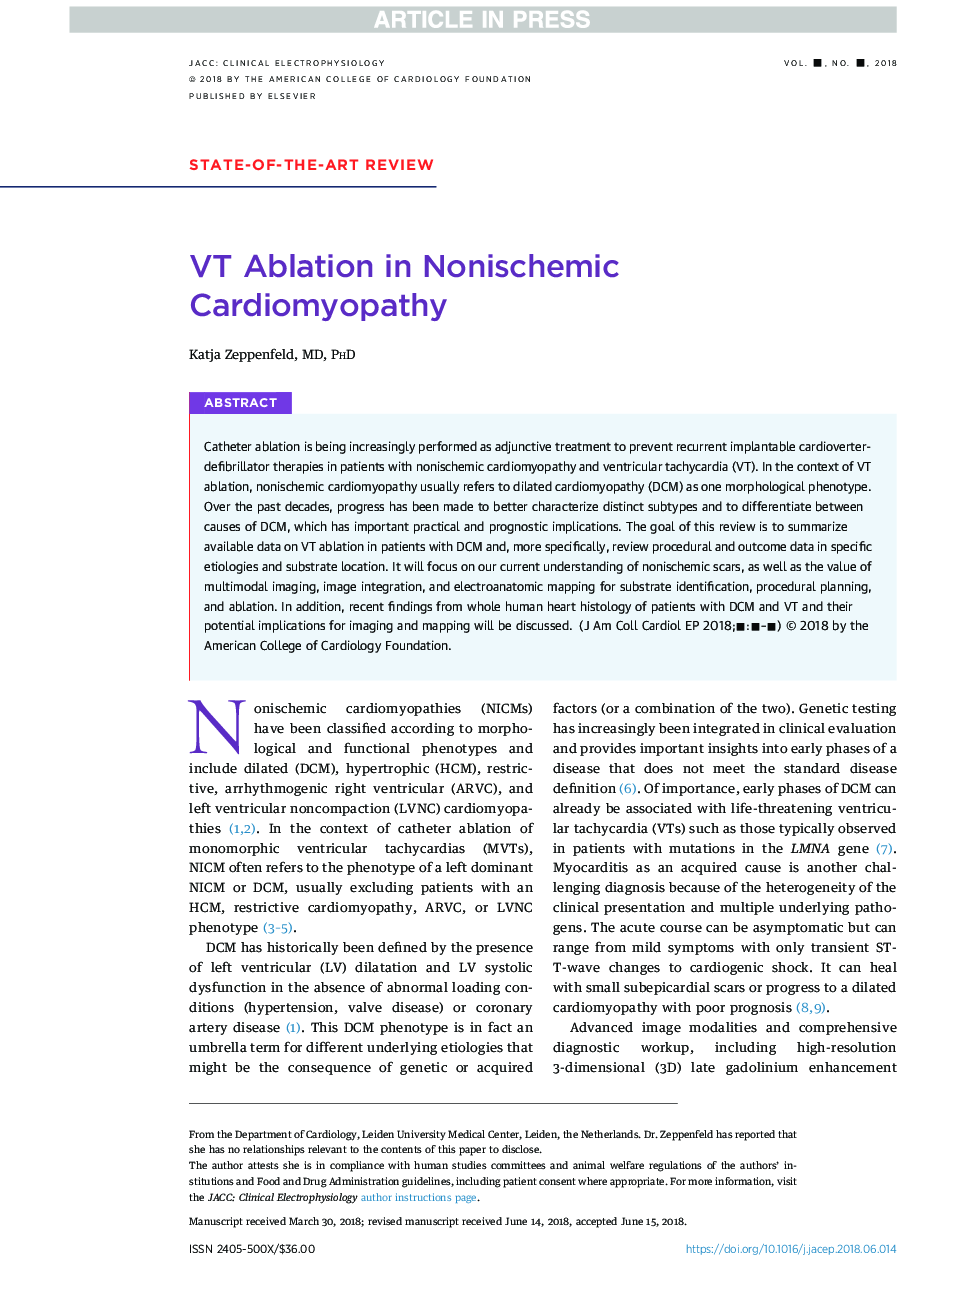 Ventricular Tachycardia Ablation in Nonischemic Cardiomyopathy